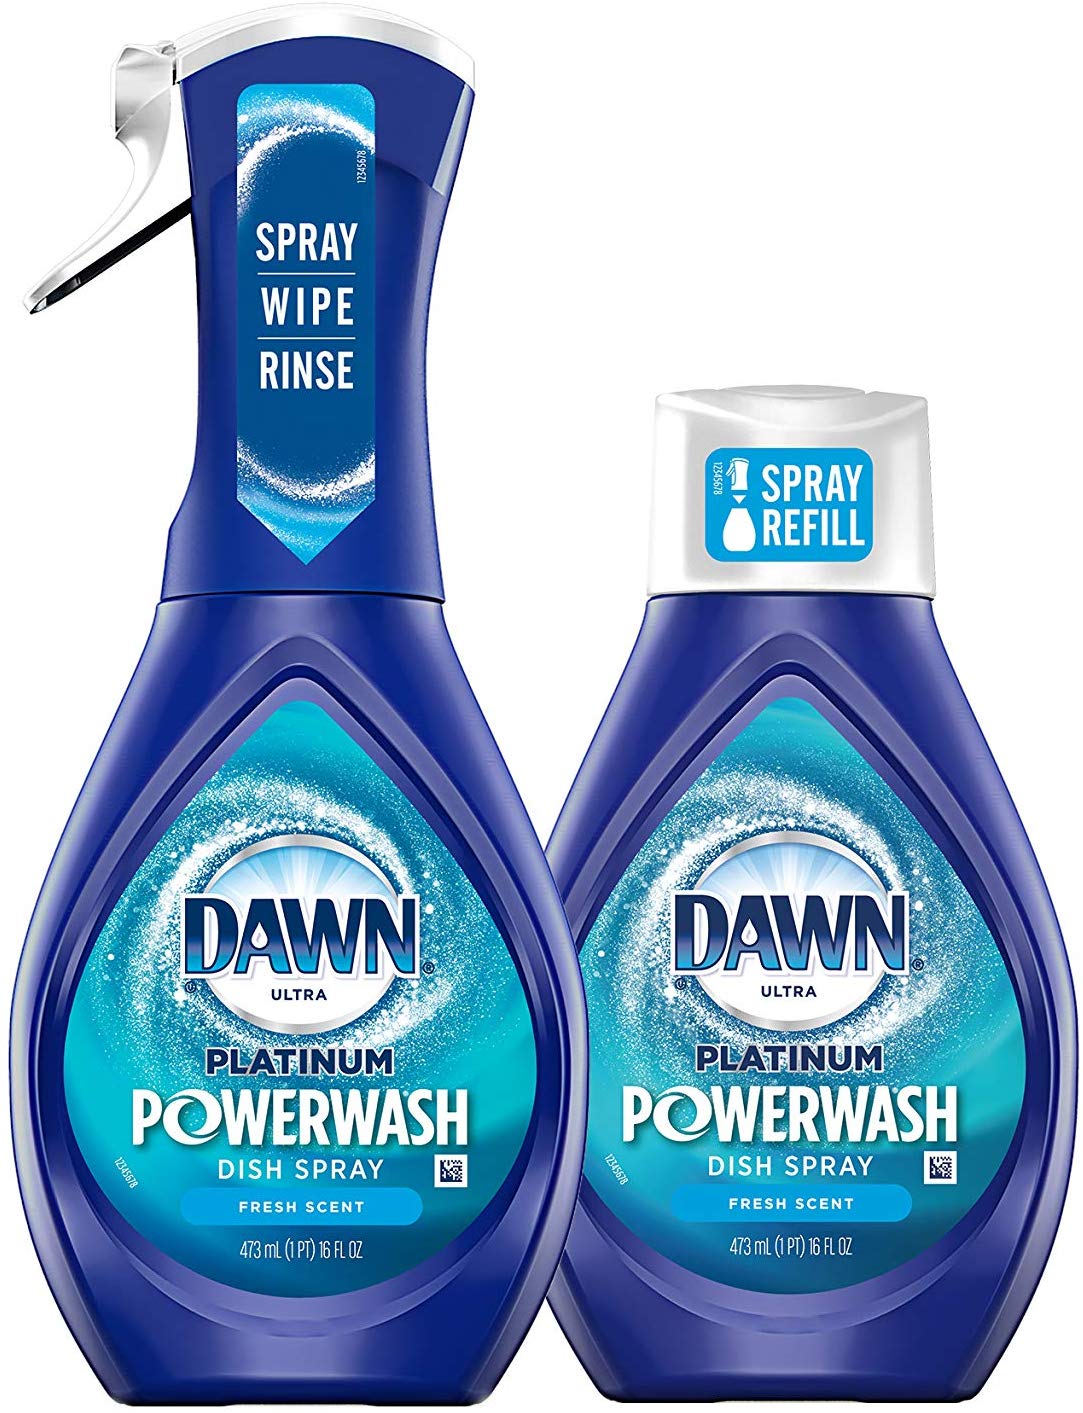 Dawn Platinum Powerwash Dish Spray, Dish Soap, Fresh Scent Bundle, 1 Starter-Kit (16 fl oz) plus 1 refill (16 fl oz ea)